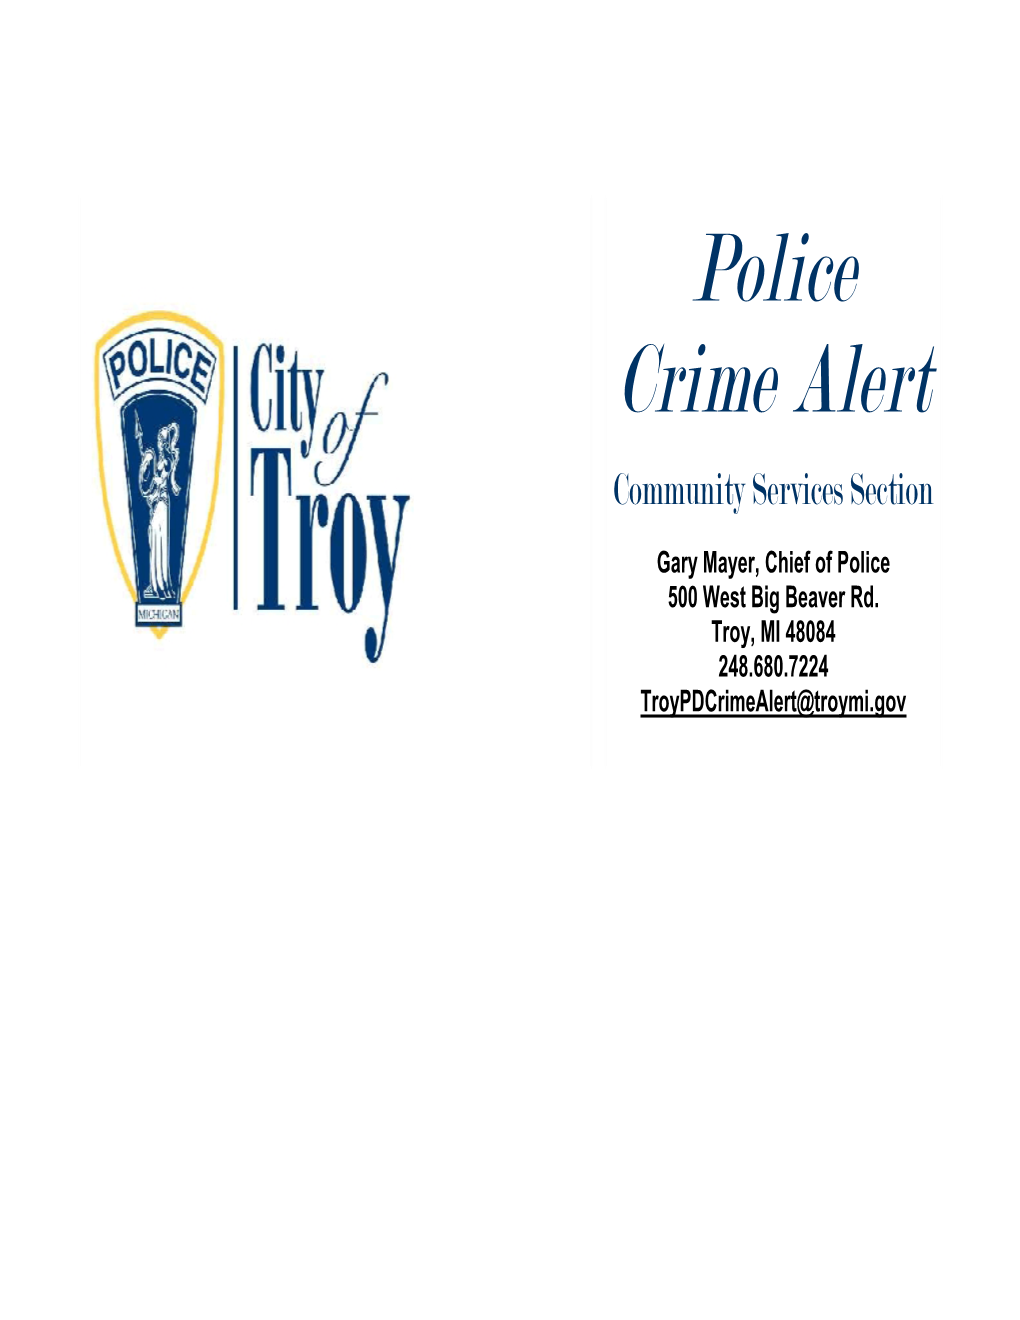 Police Crime Alert Community Services Section